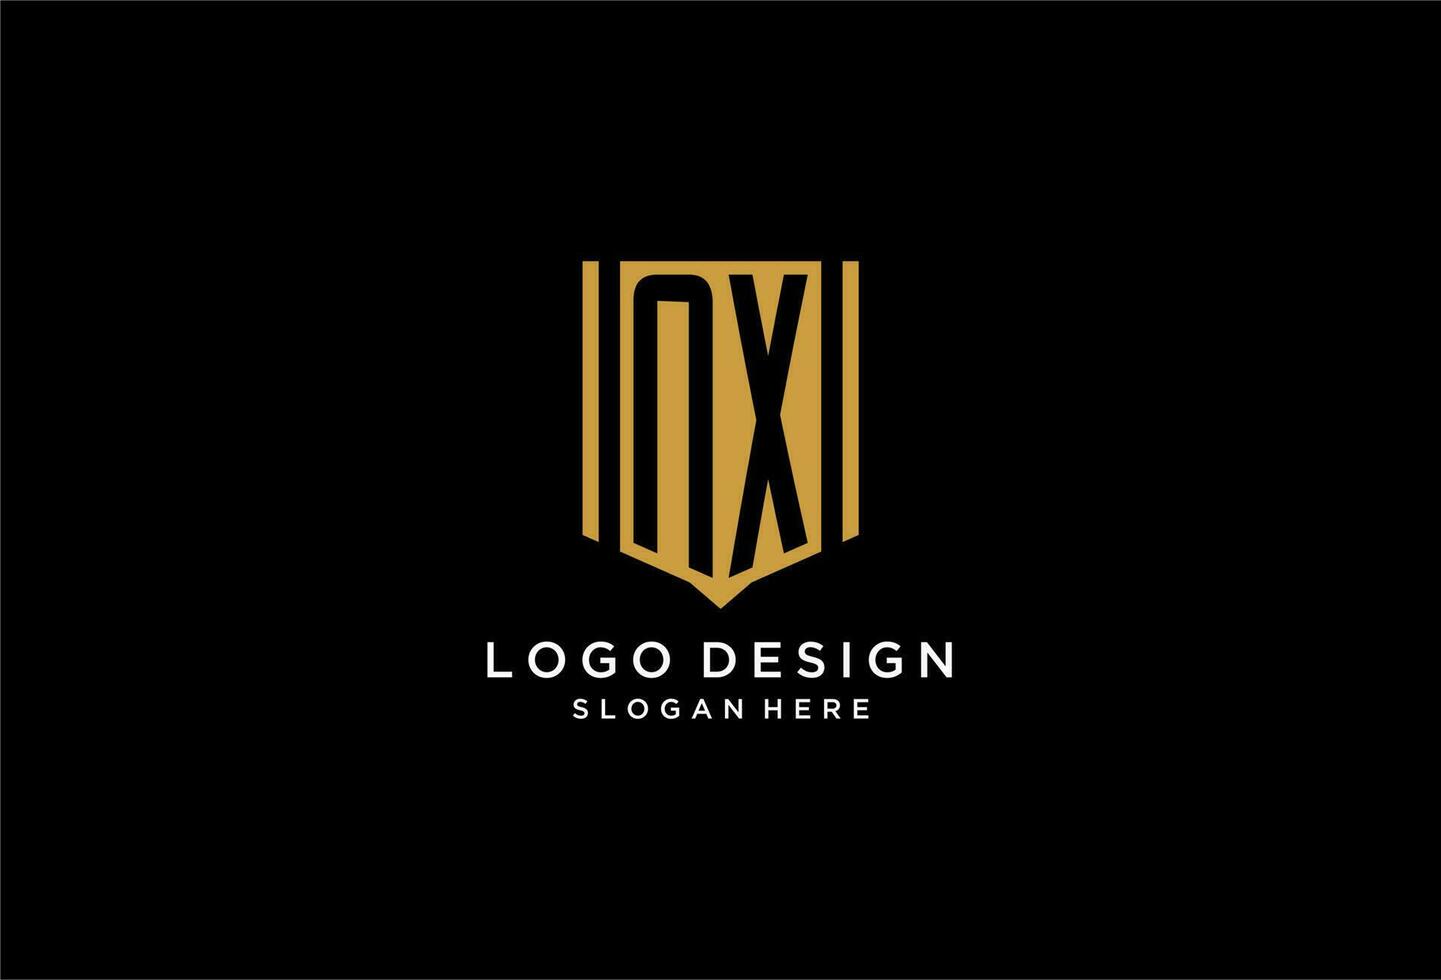 NX monogram logo with geometric shield icon design vector